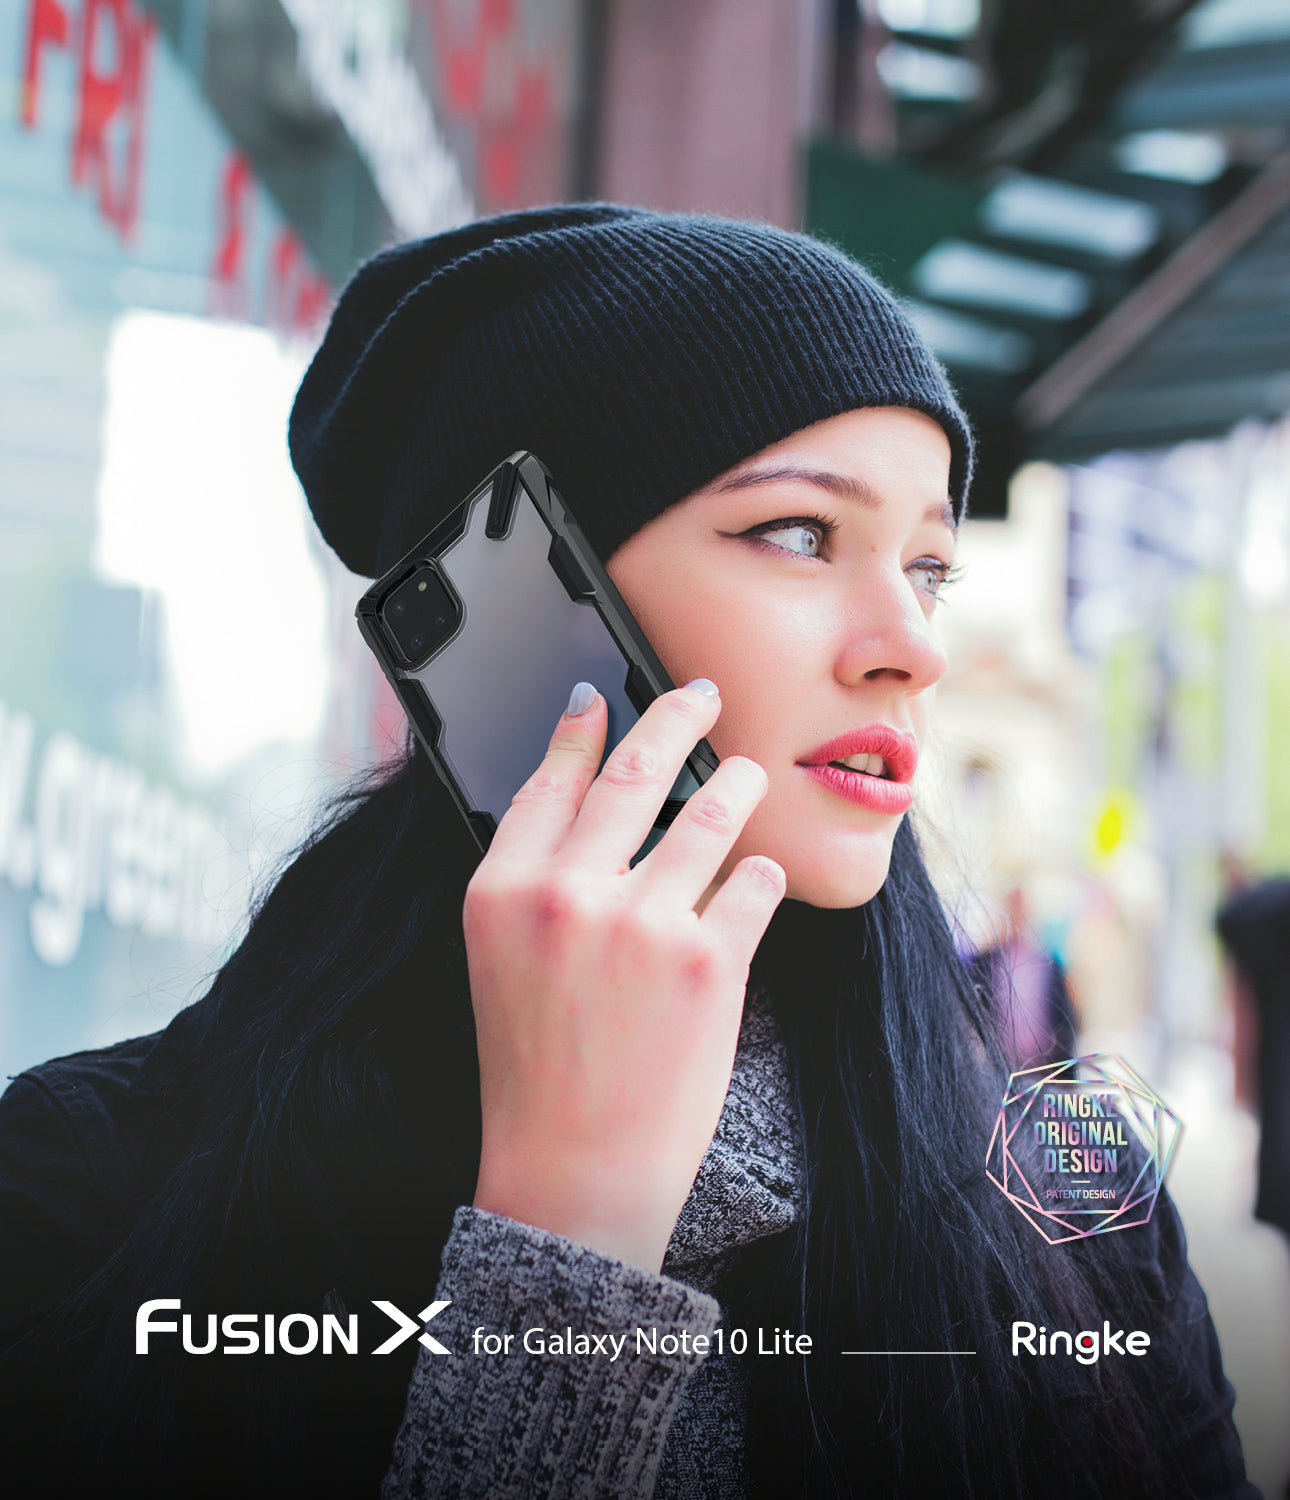 ringke Galaxy Note 10 Lite [FUSION-X] 2020 black color comfortable grip